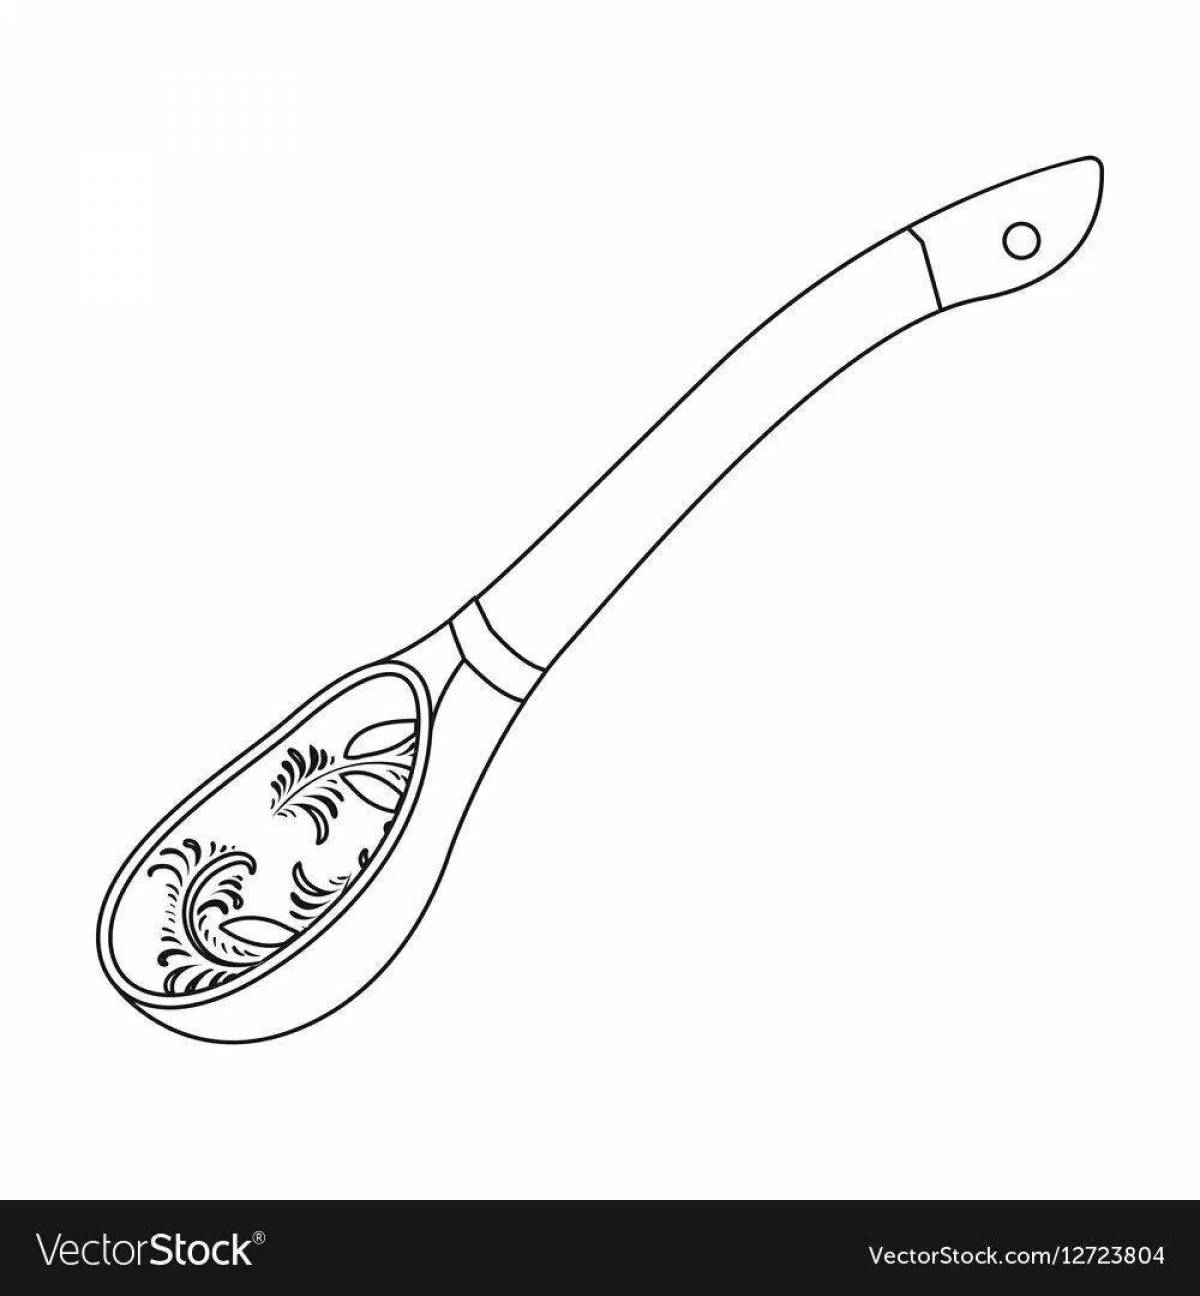 Delightful Khokhloma spoon coloring book